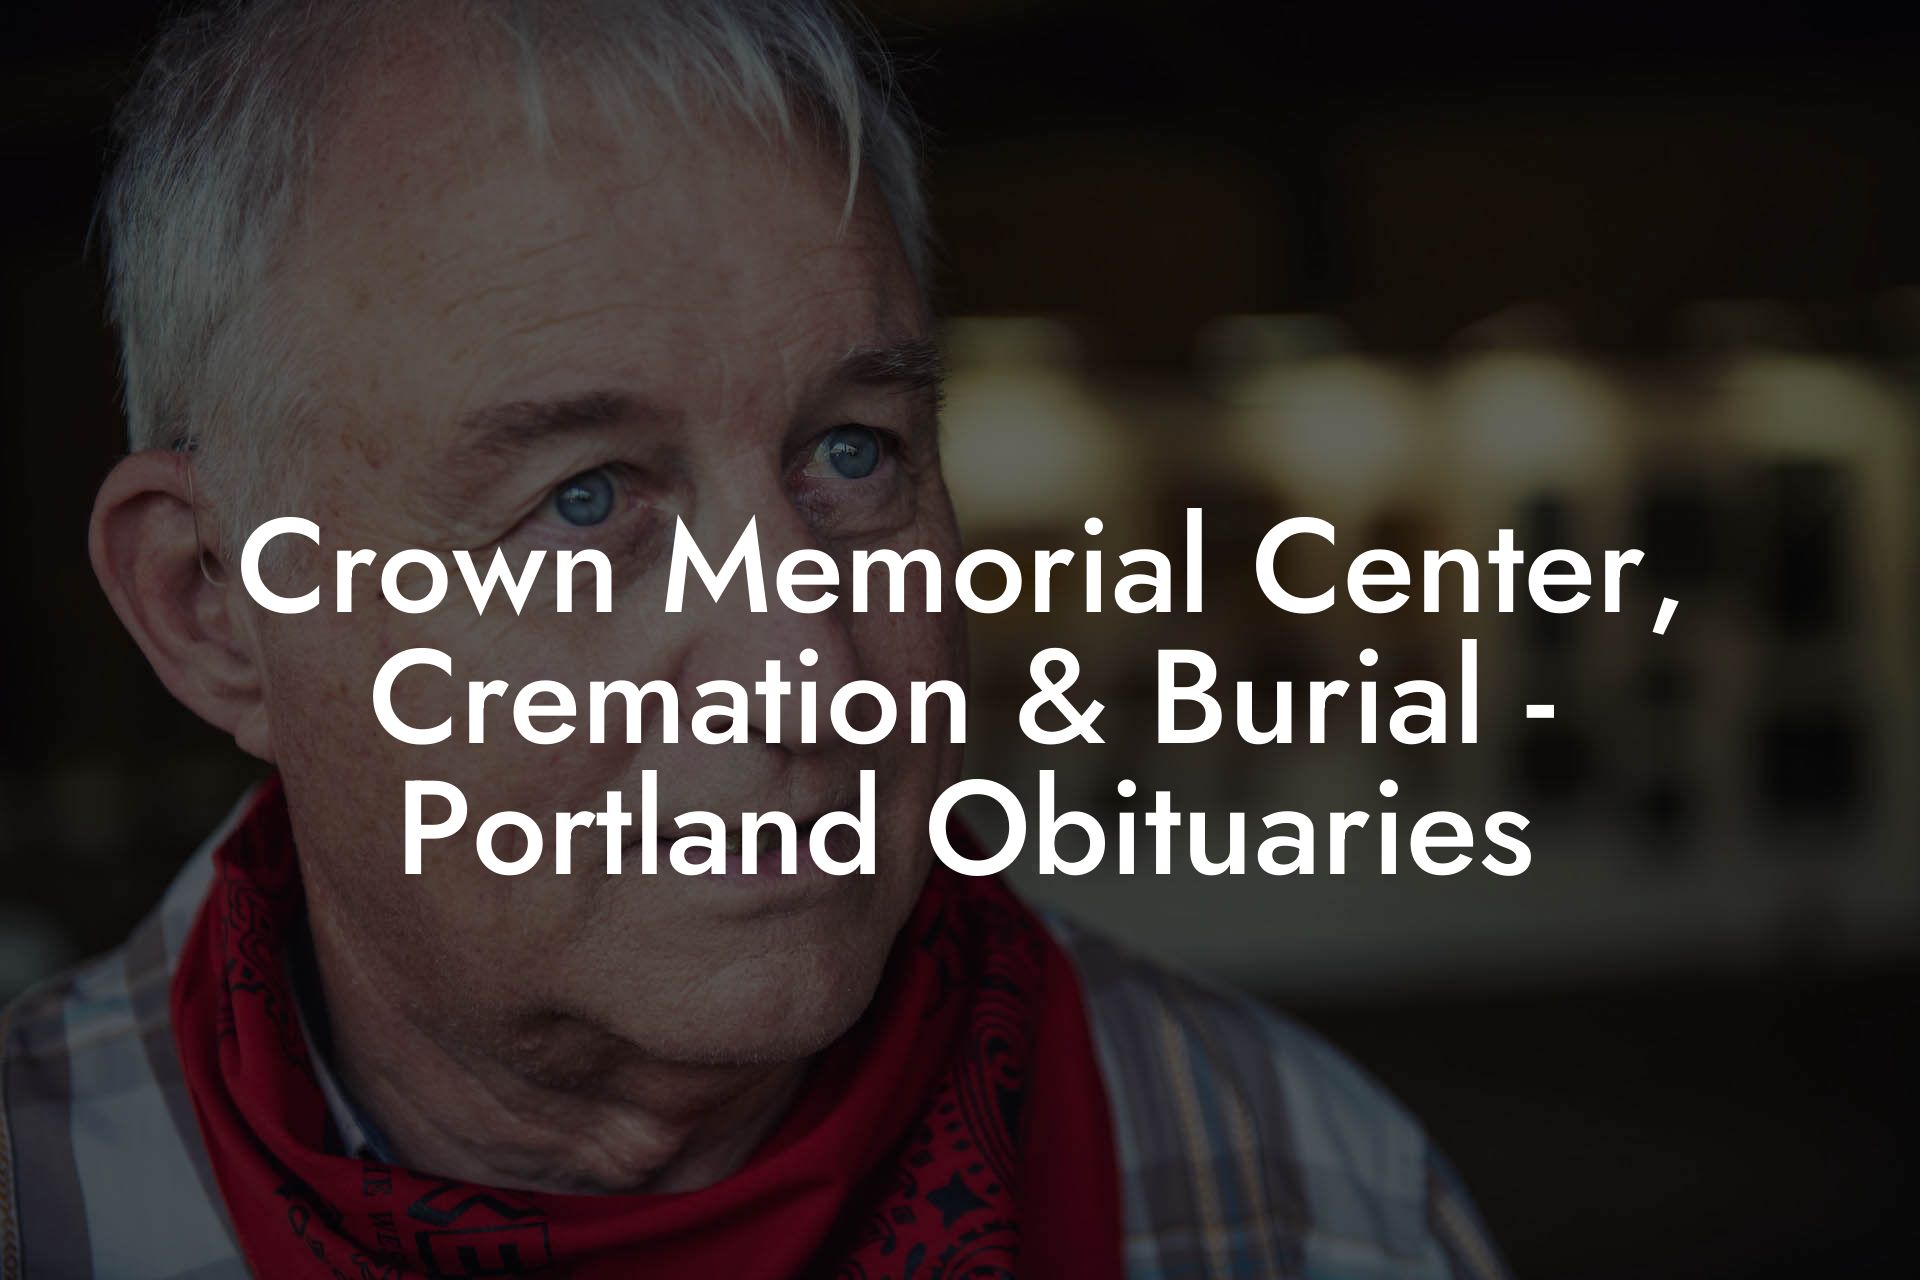 Crown Memorial Center, Cremation & Burial - Portland Obituaries